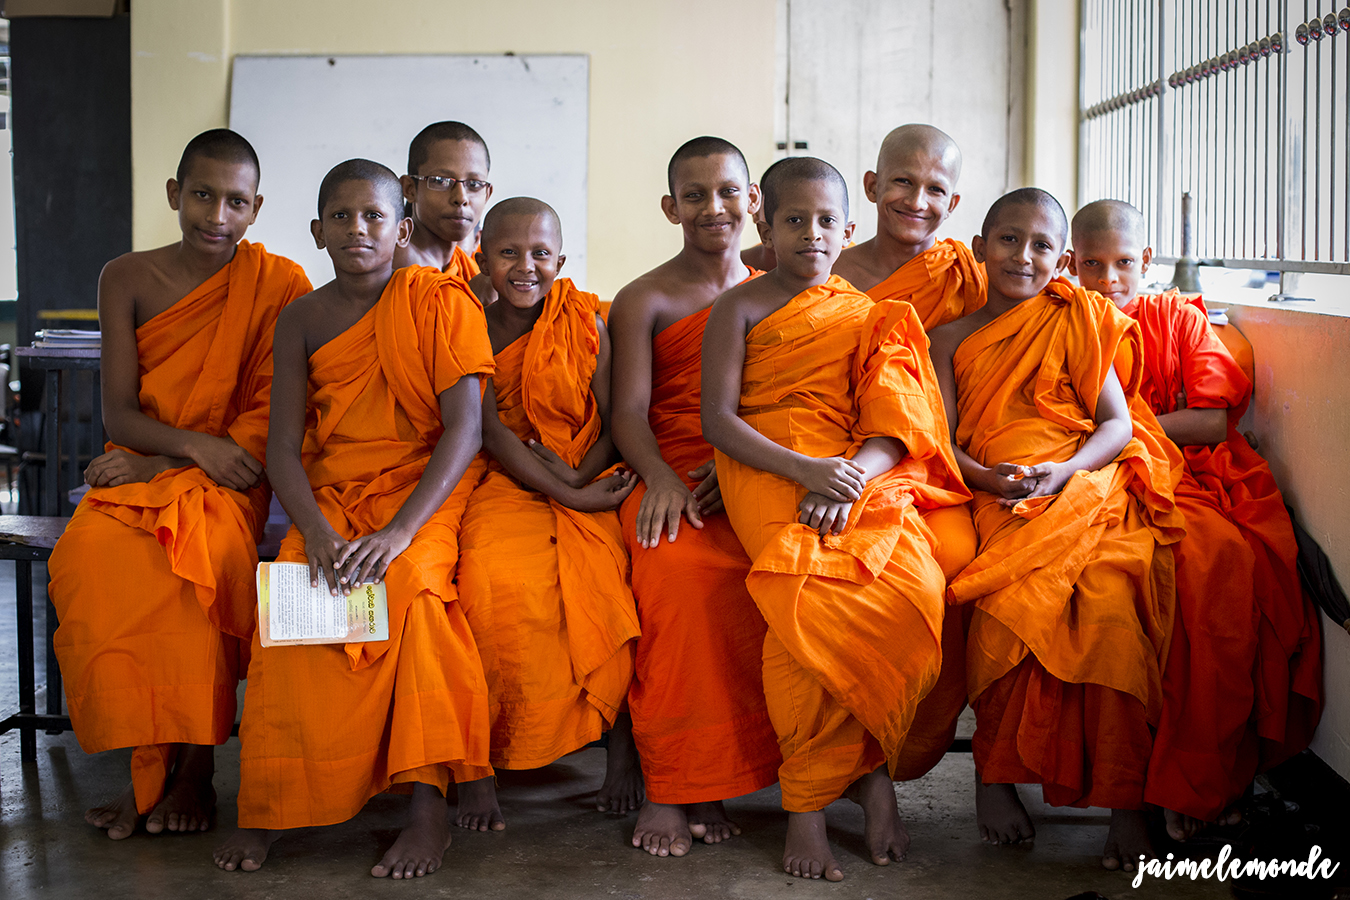 Portraits de voyage au Sri Lanka ©jaimelemonde (16)